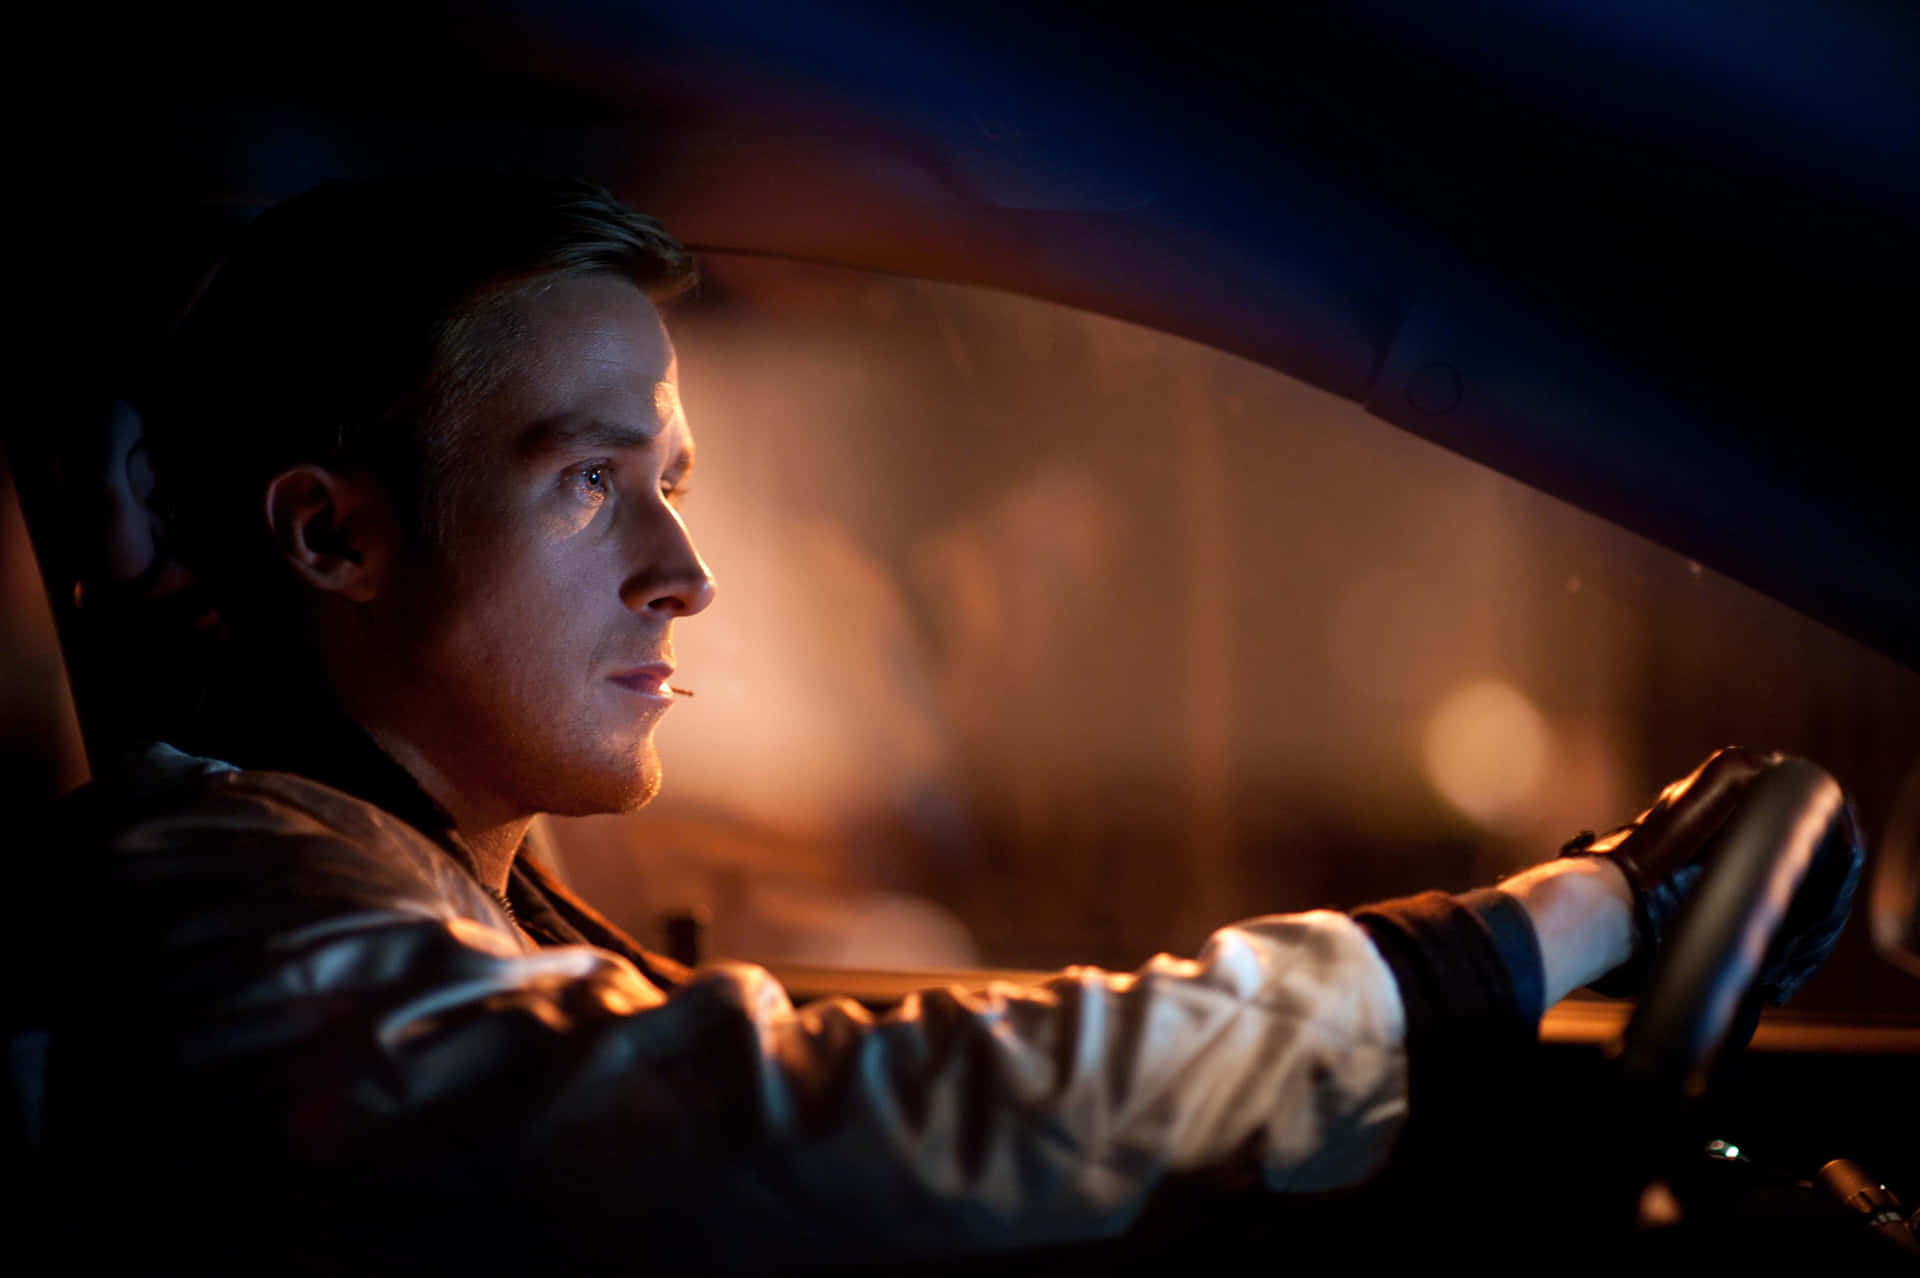 Focused Man Drivingat Night Wallpaper